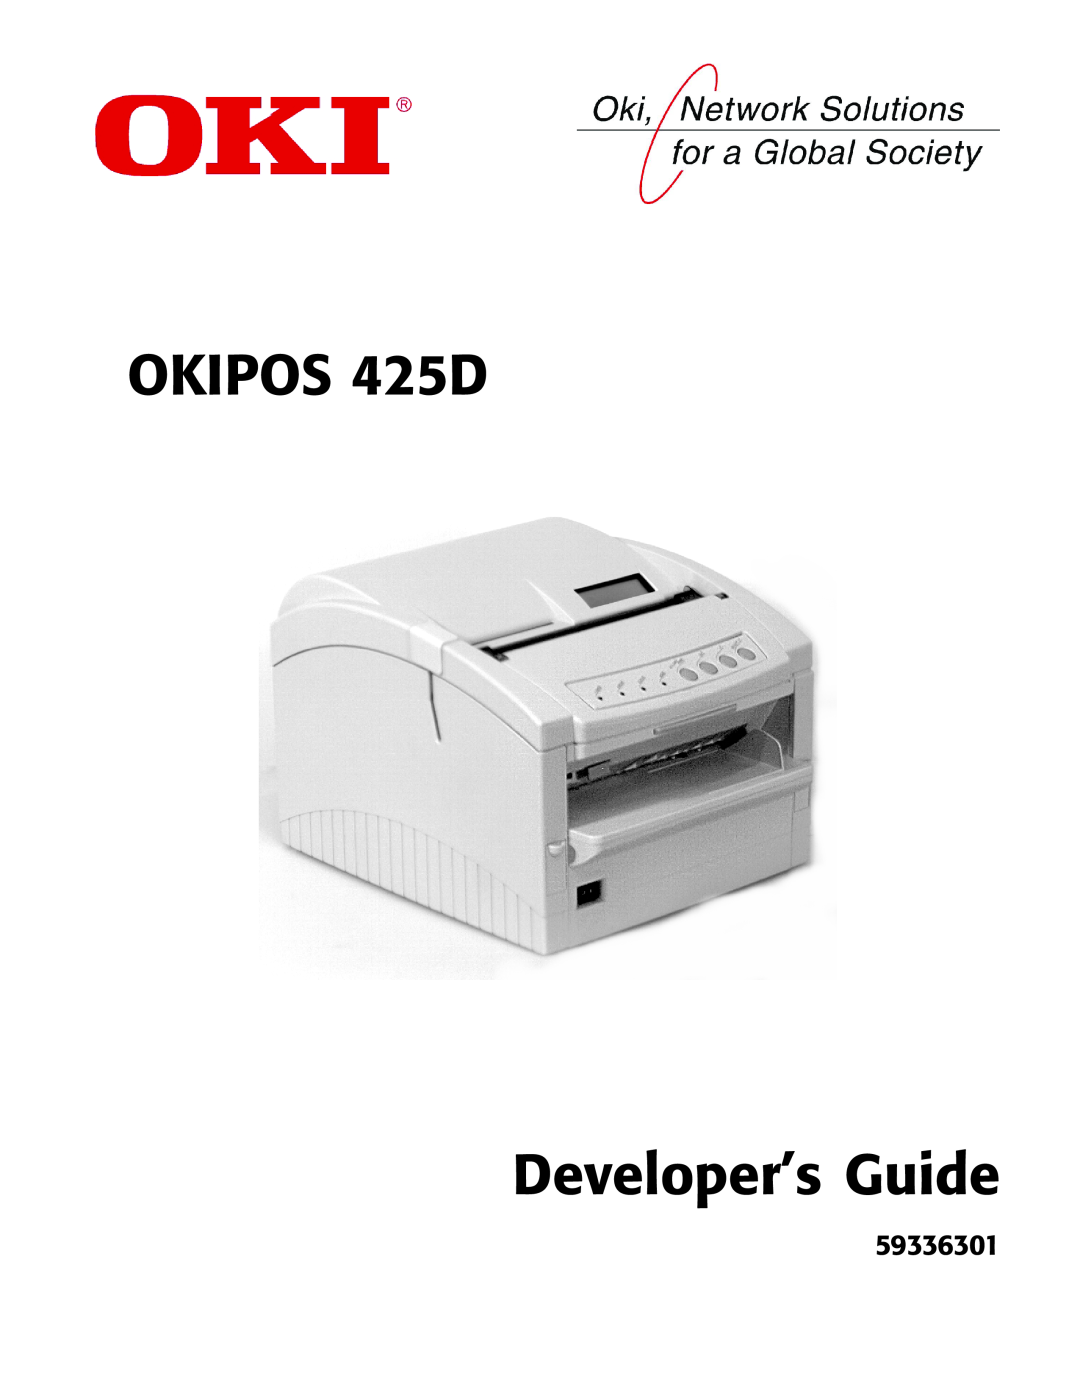 Oki manual OKIPOS 425D Developer’s Guide, 59336301 